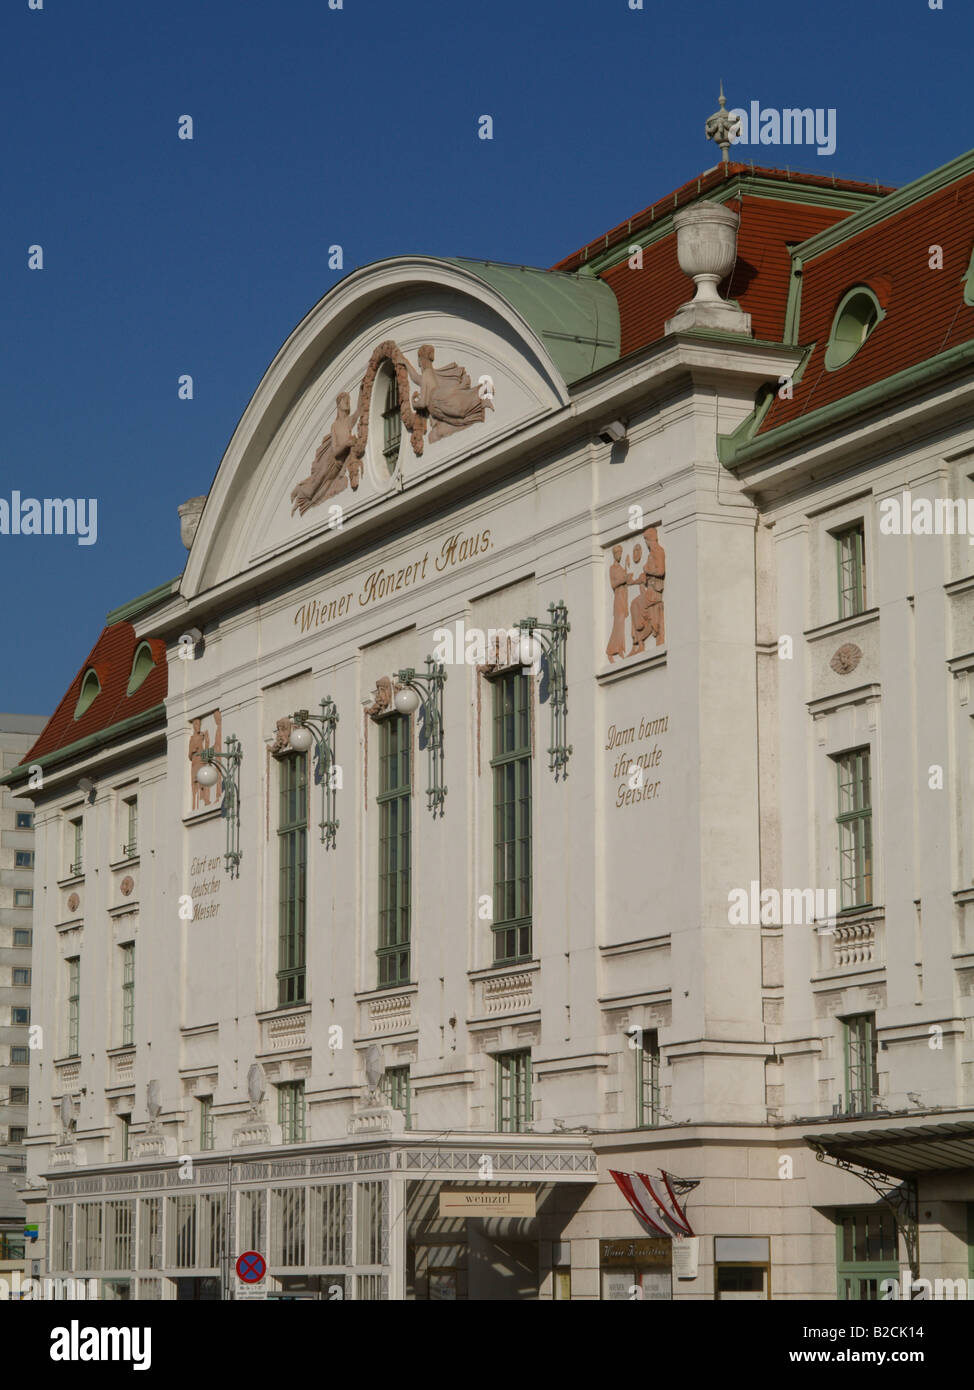 Vienna, Concert House Foto Stock